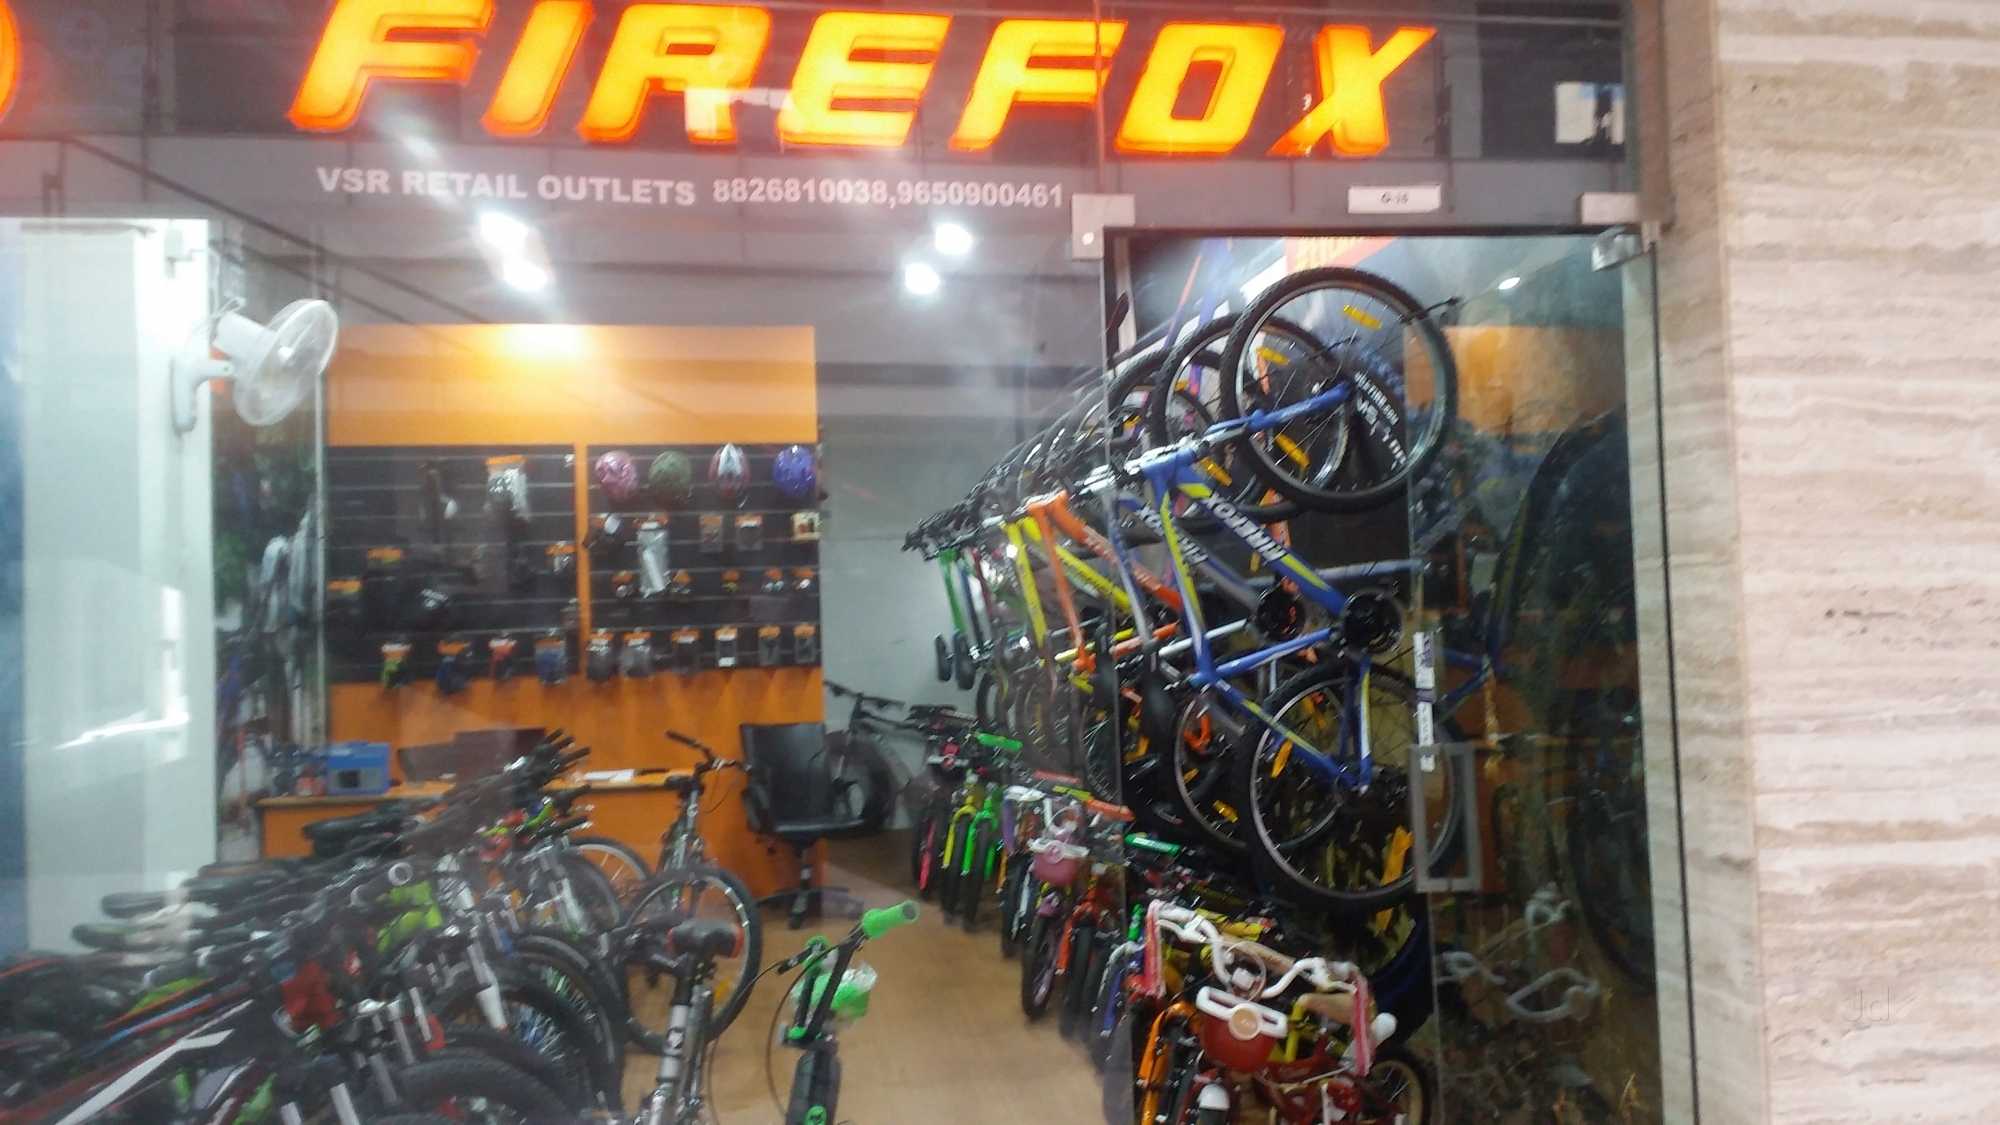 Firefox bike station